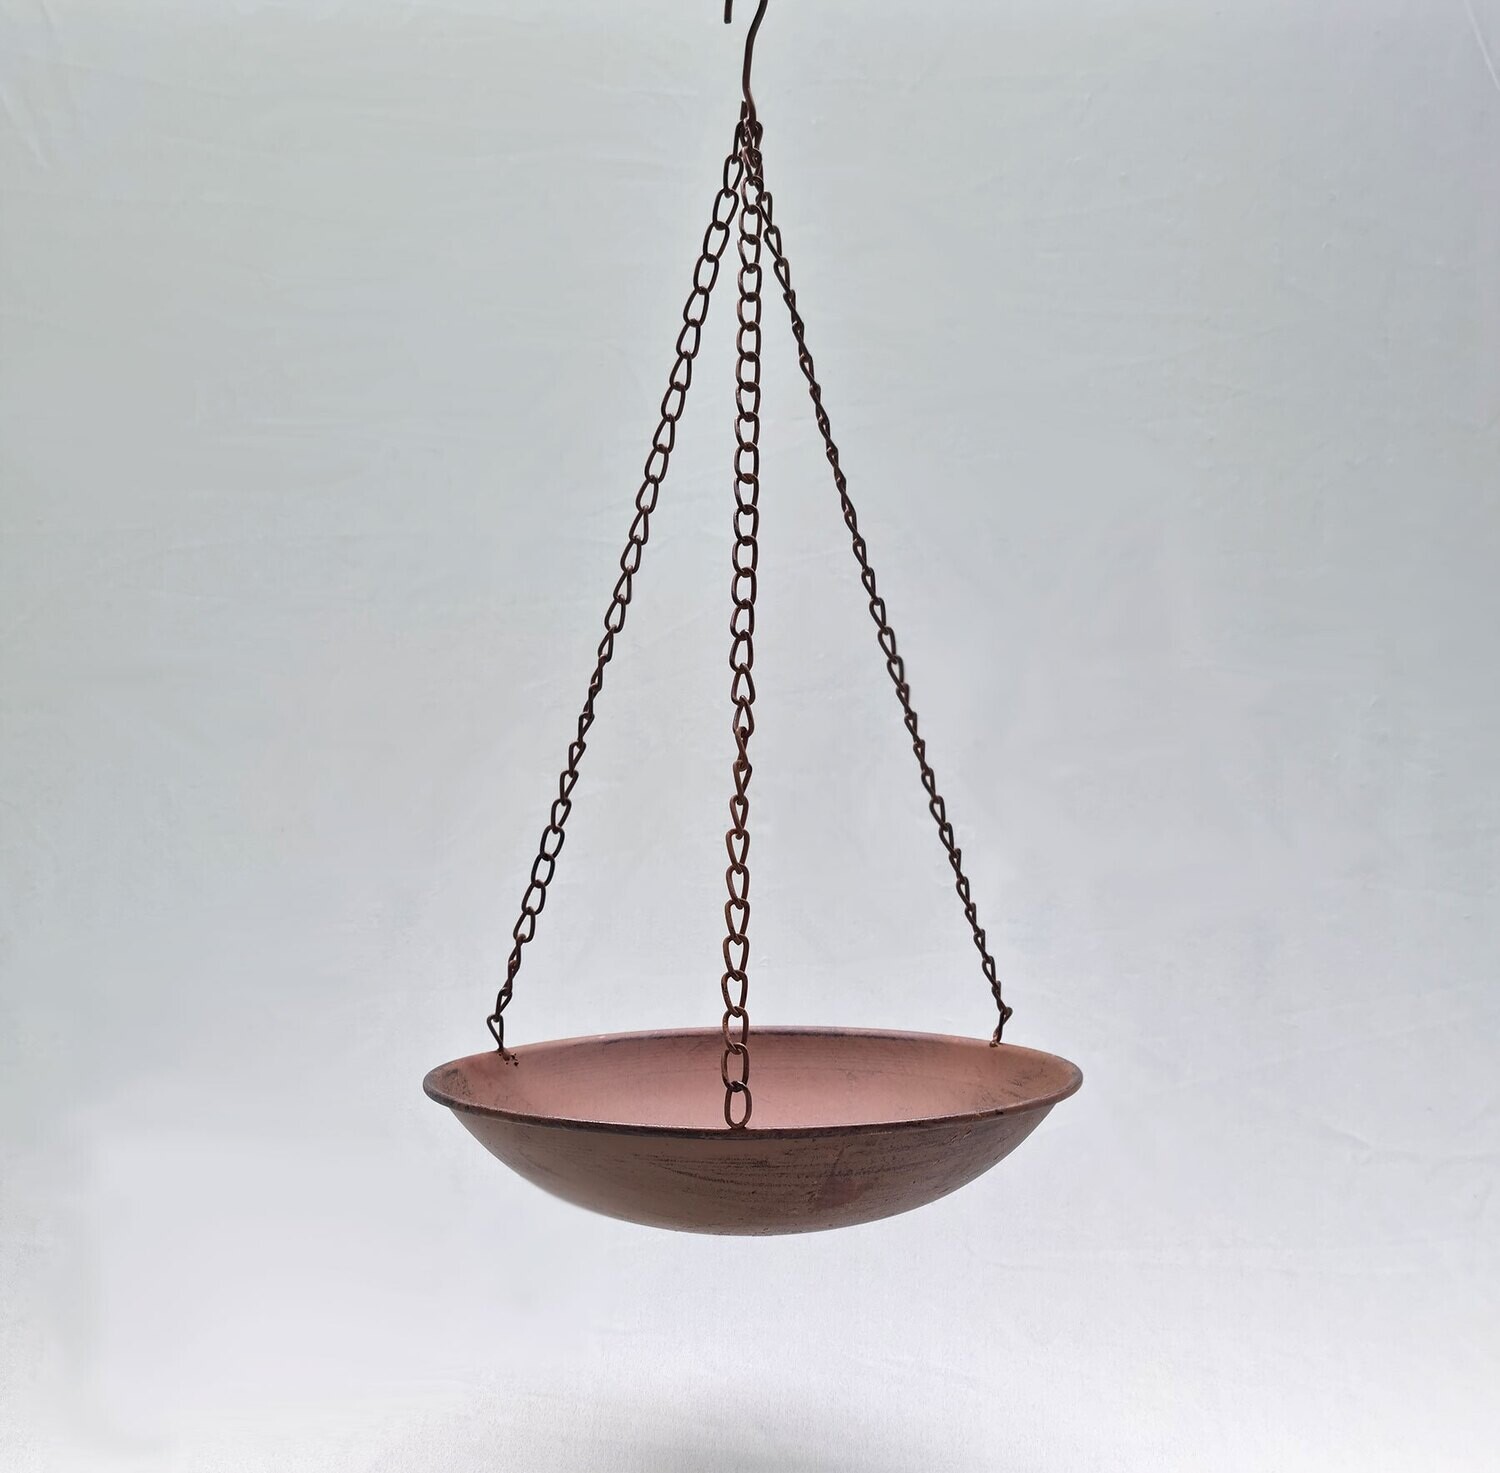 Hanging bowl bird feeder (rust)